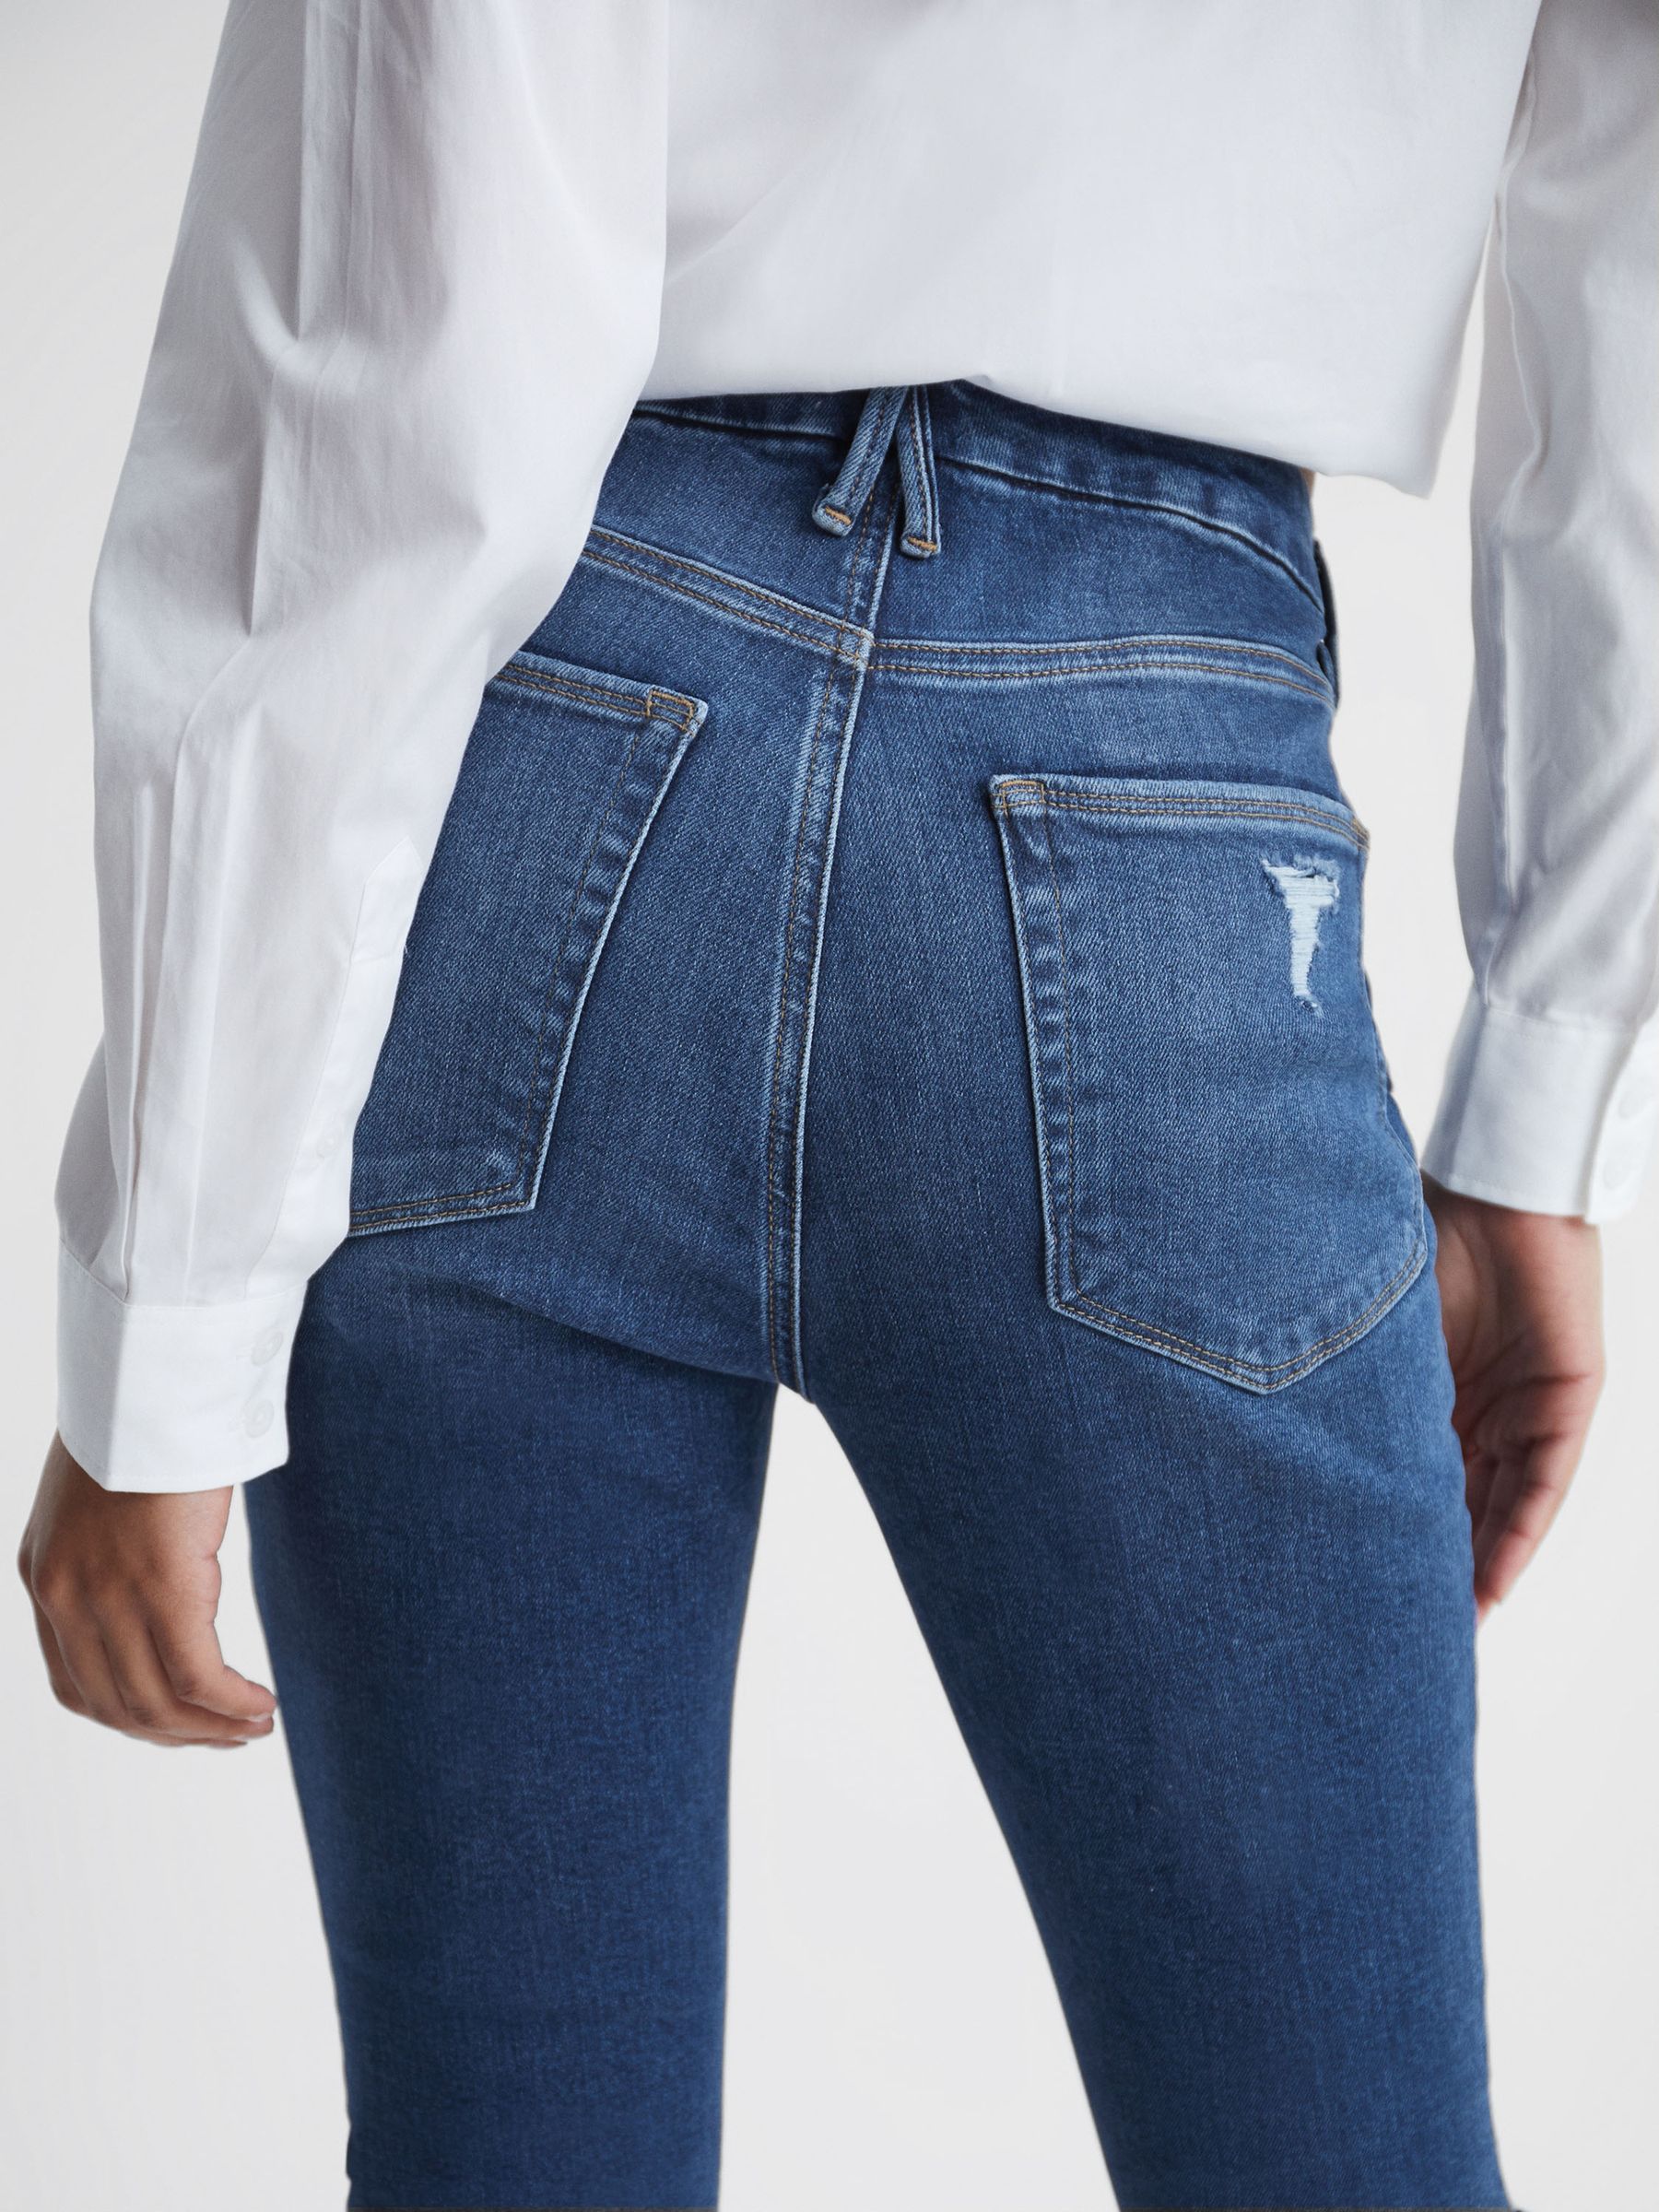 Reiss Good American Cropped Skinny Jeans - REISS